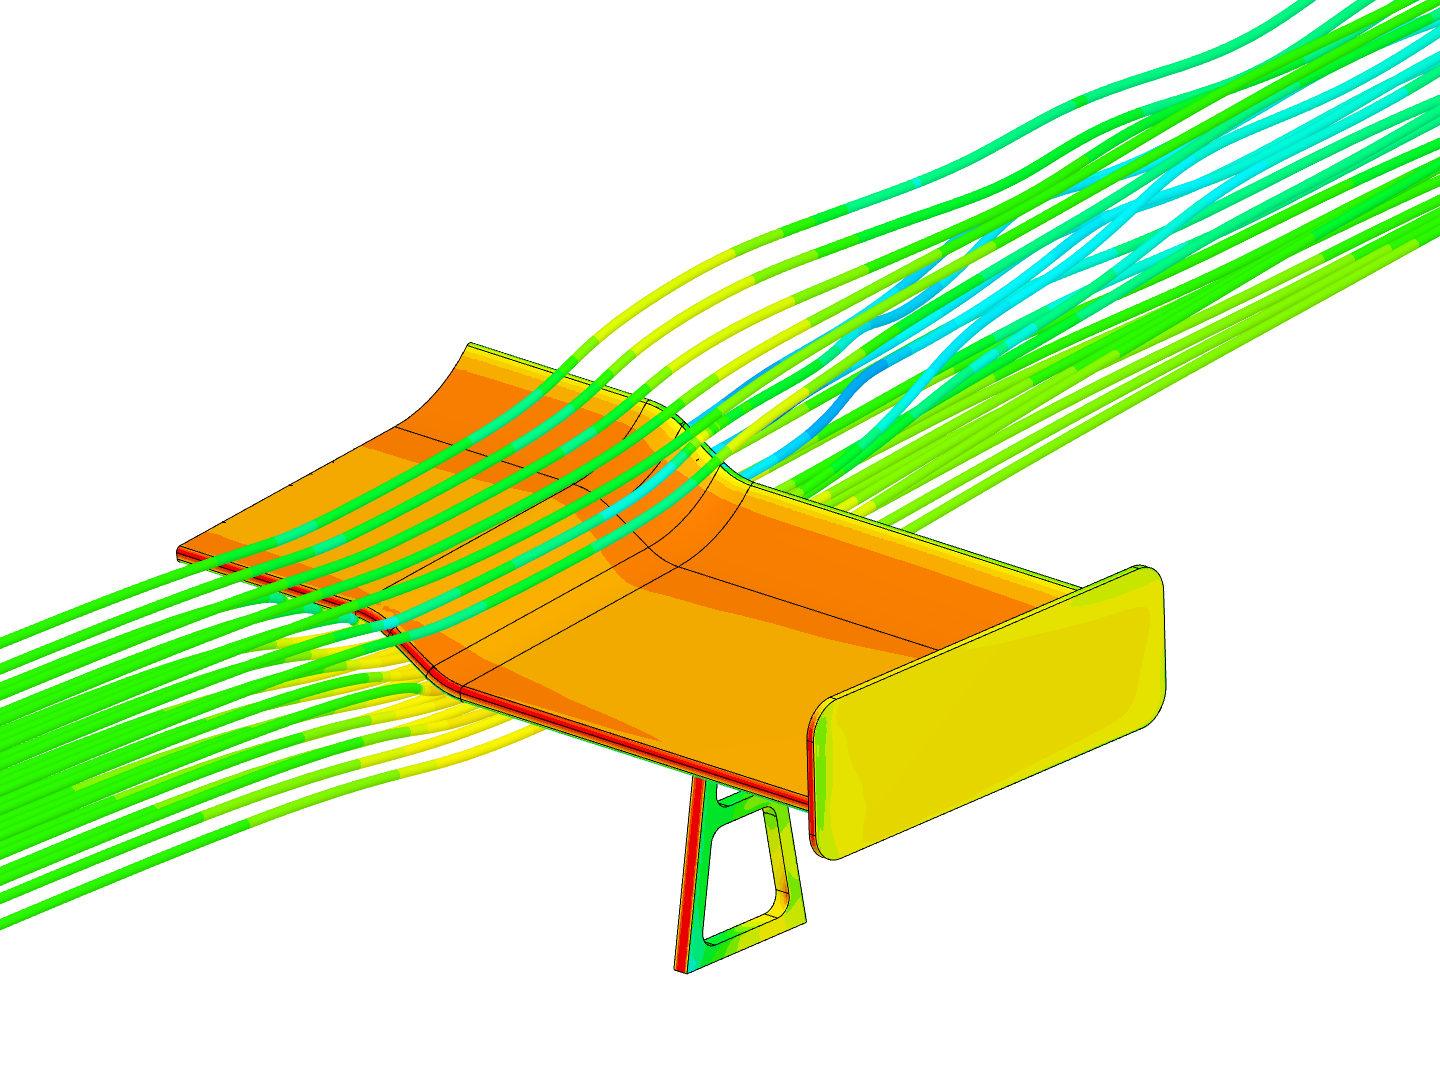 Airflow around a spolier image